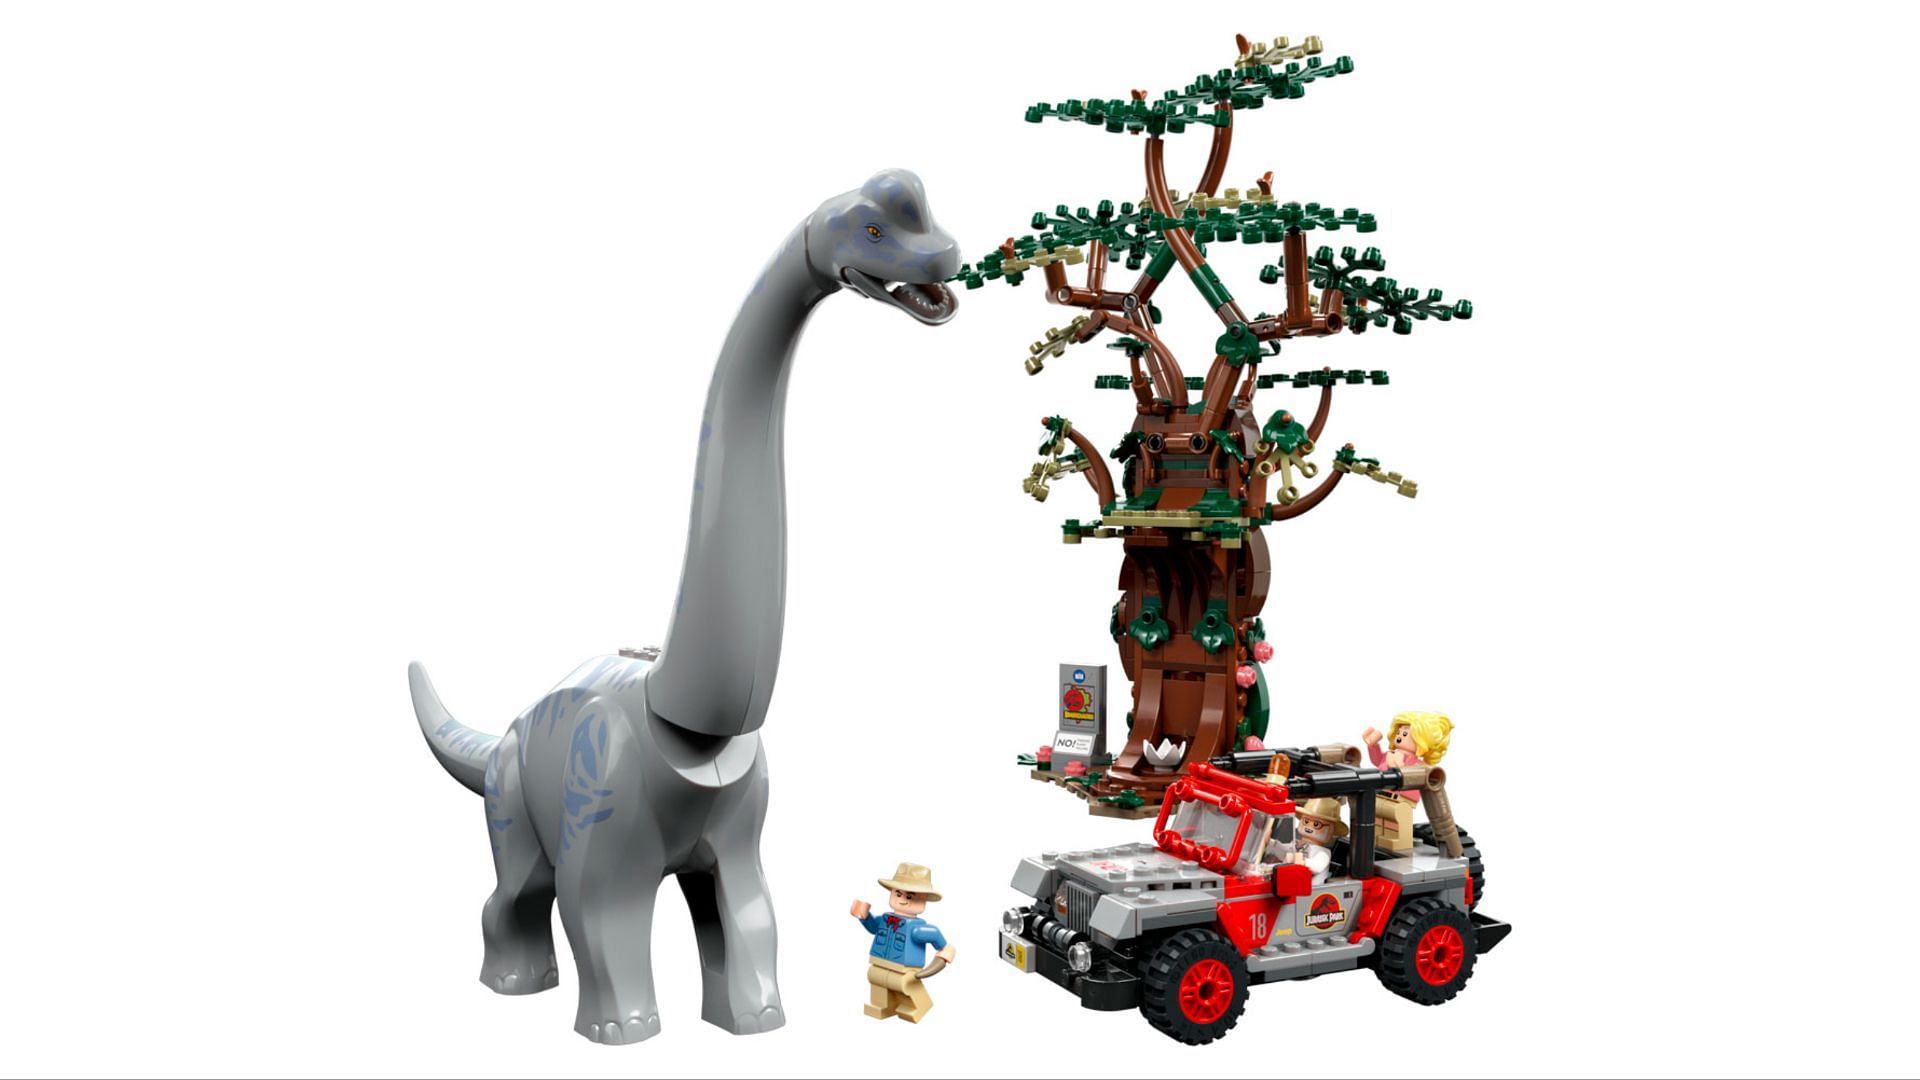 Jurassic Park Brachiosaurus Discovery set (Image via LEGŌ)